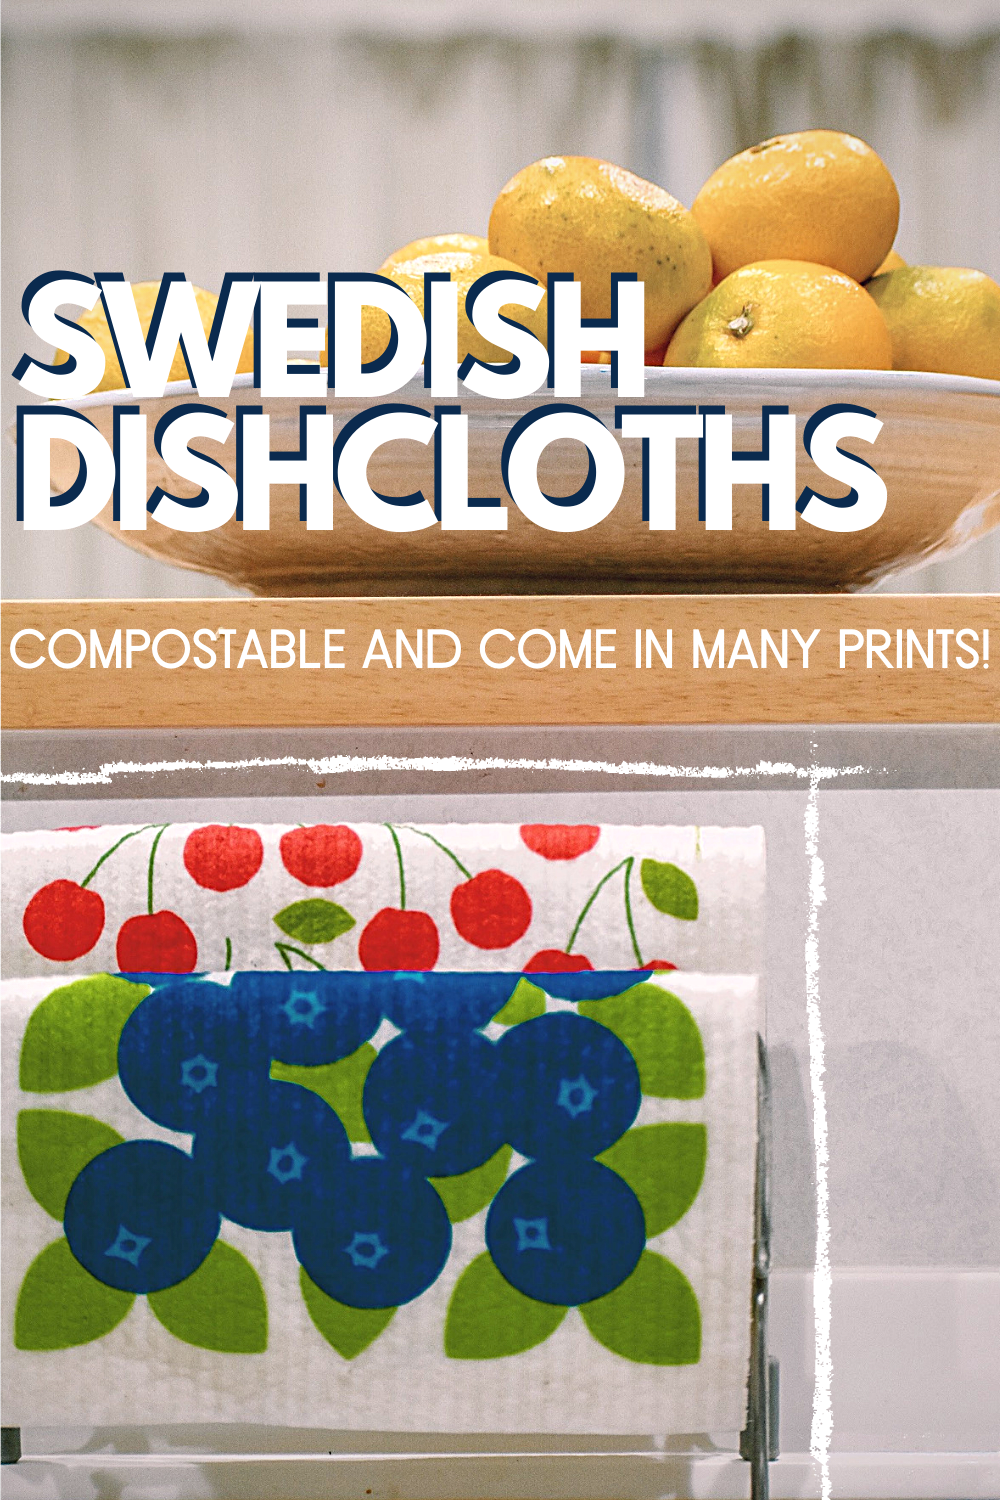 SWEDISH DISH CLOTHS AT MIGHTYNEST